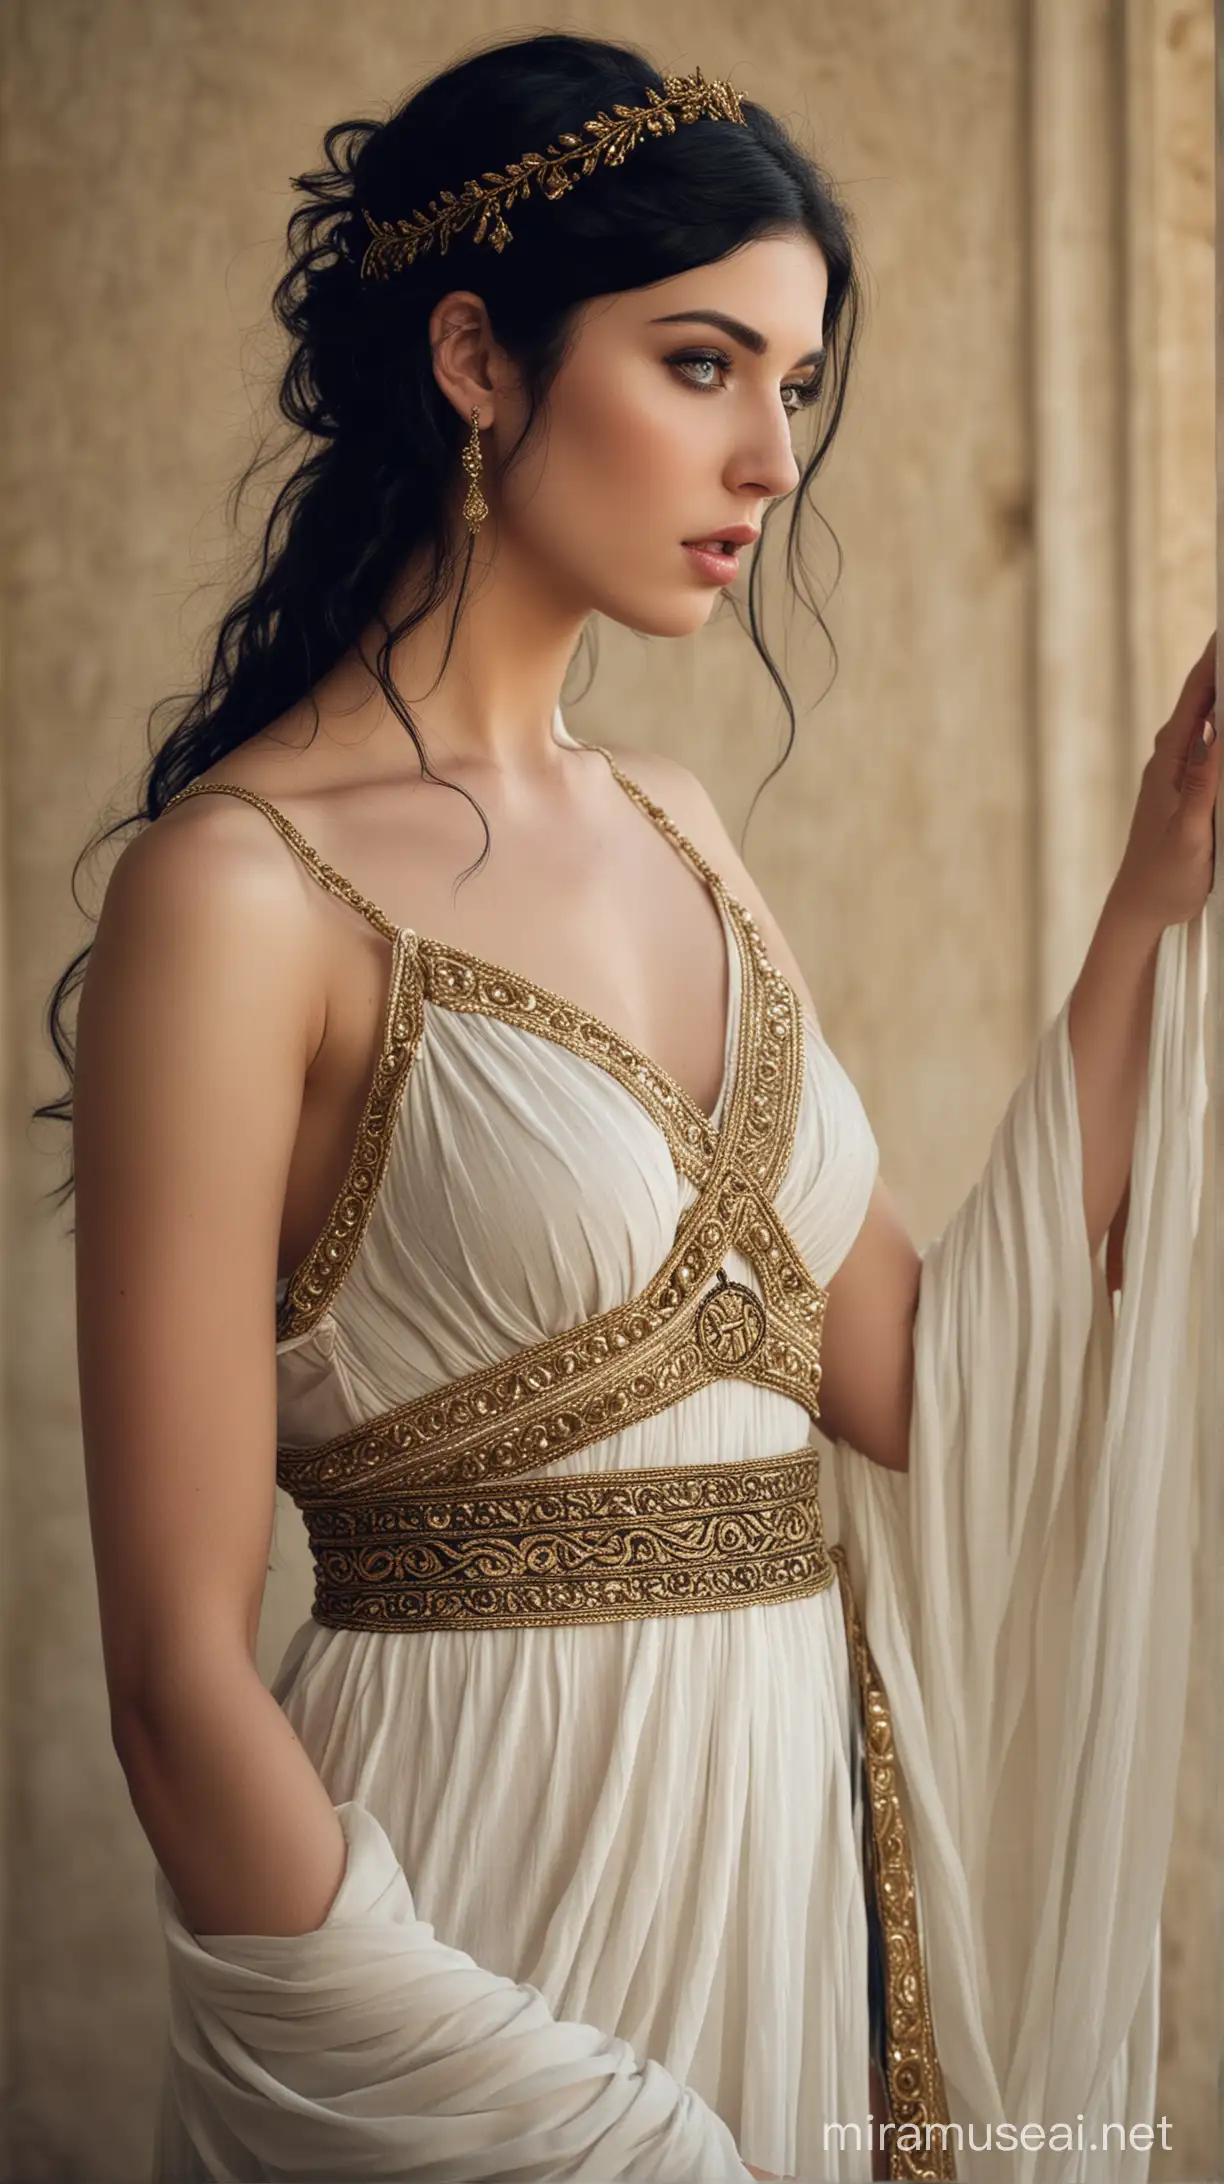 Sensual Greek Woman Medea in Elegant Attire with Fair Skin and Black Hair